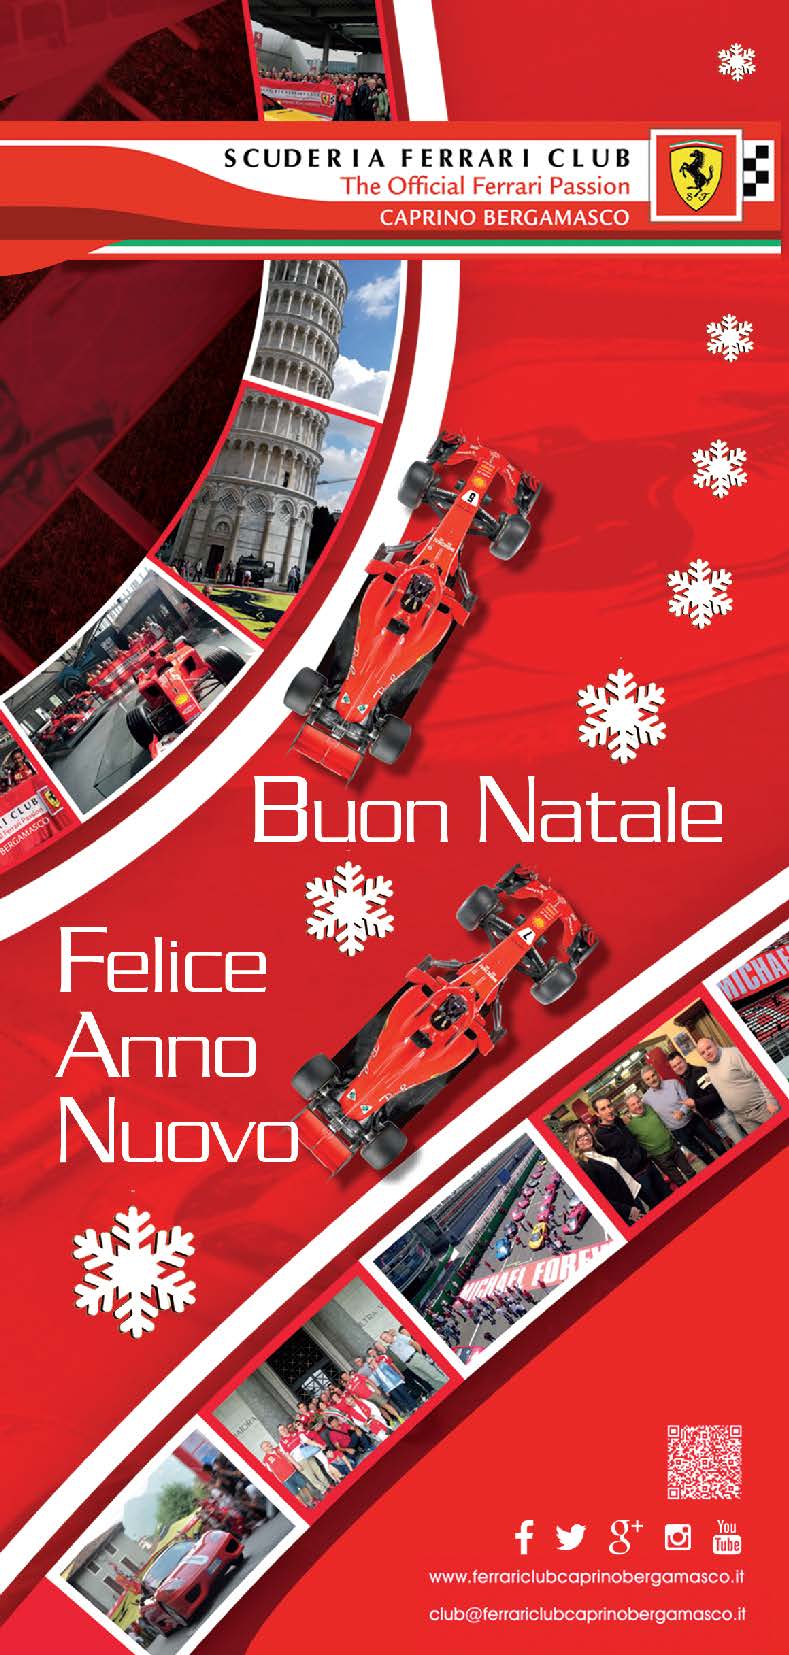 Buon Natale Ferrari.Scuderia Ferrari Caprino Bergamasco Blog Archive S Natale 2018